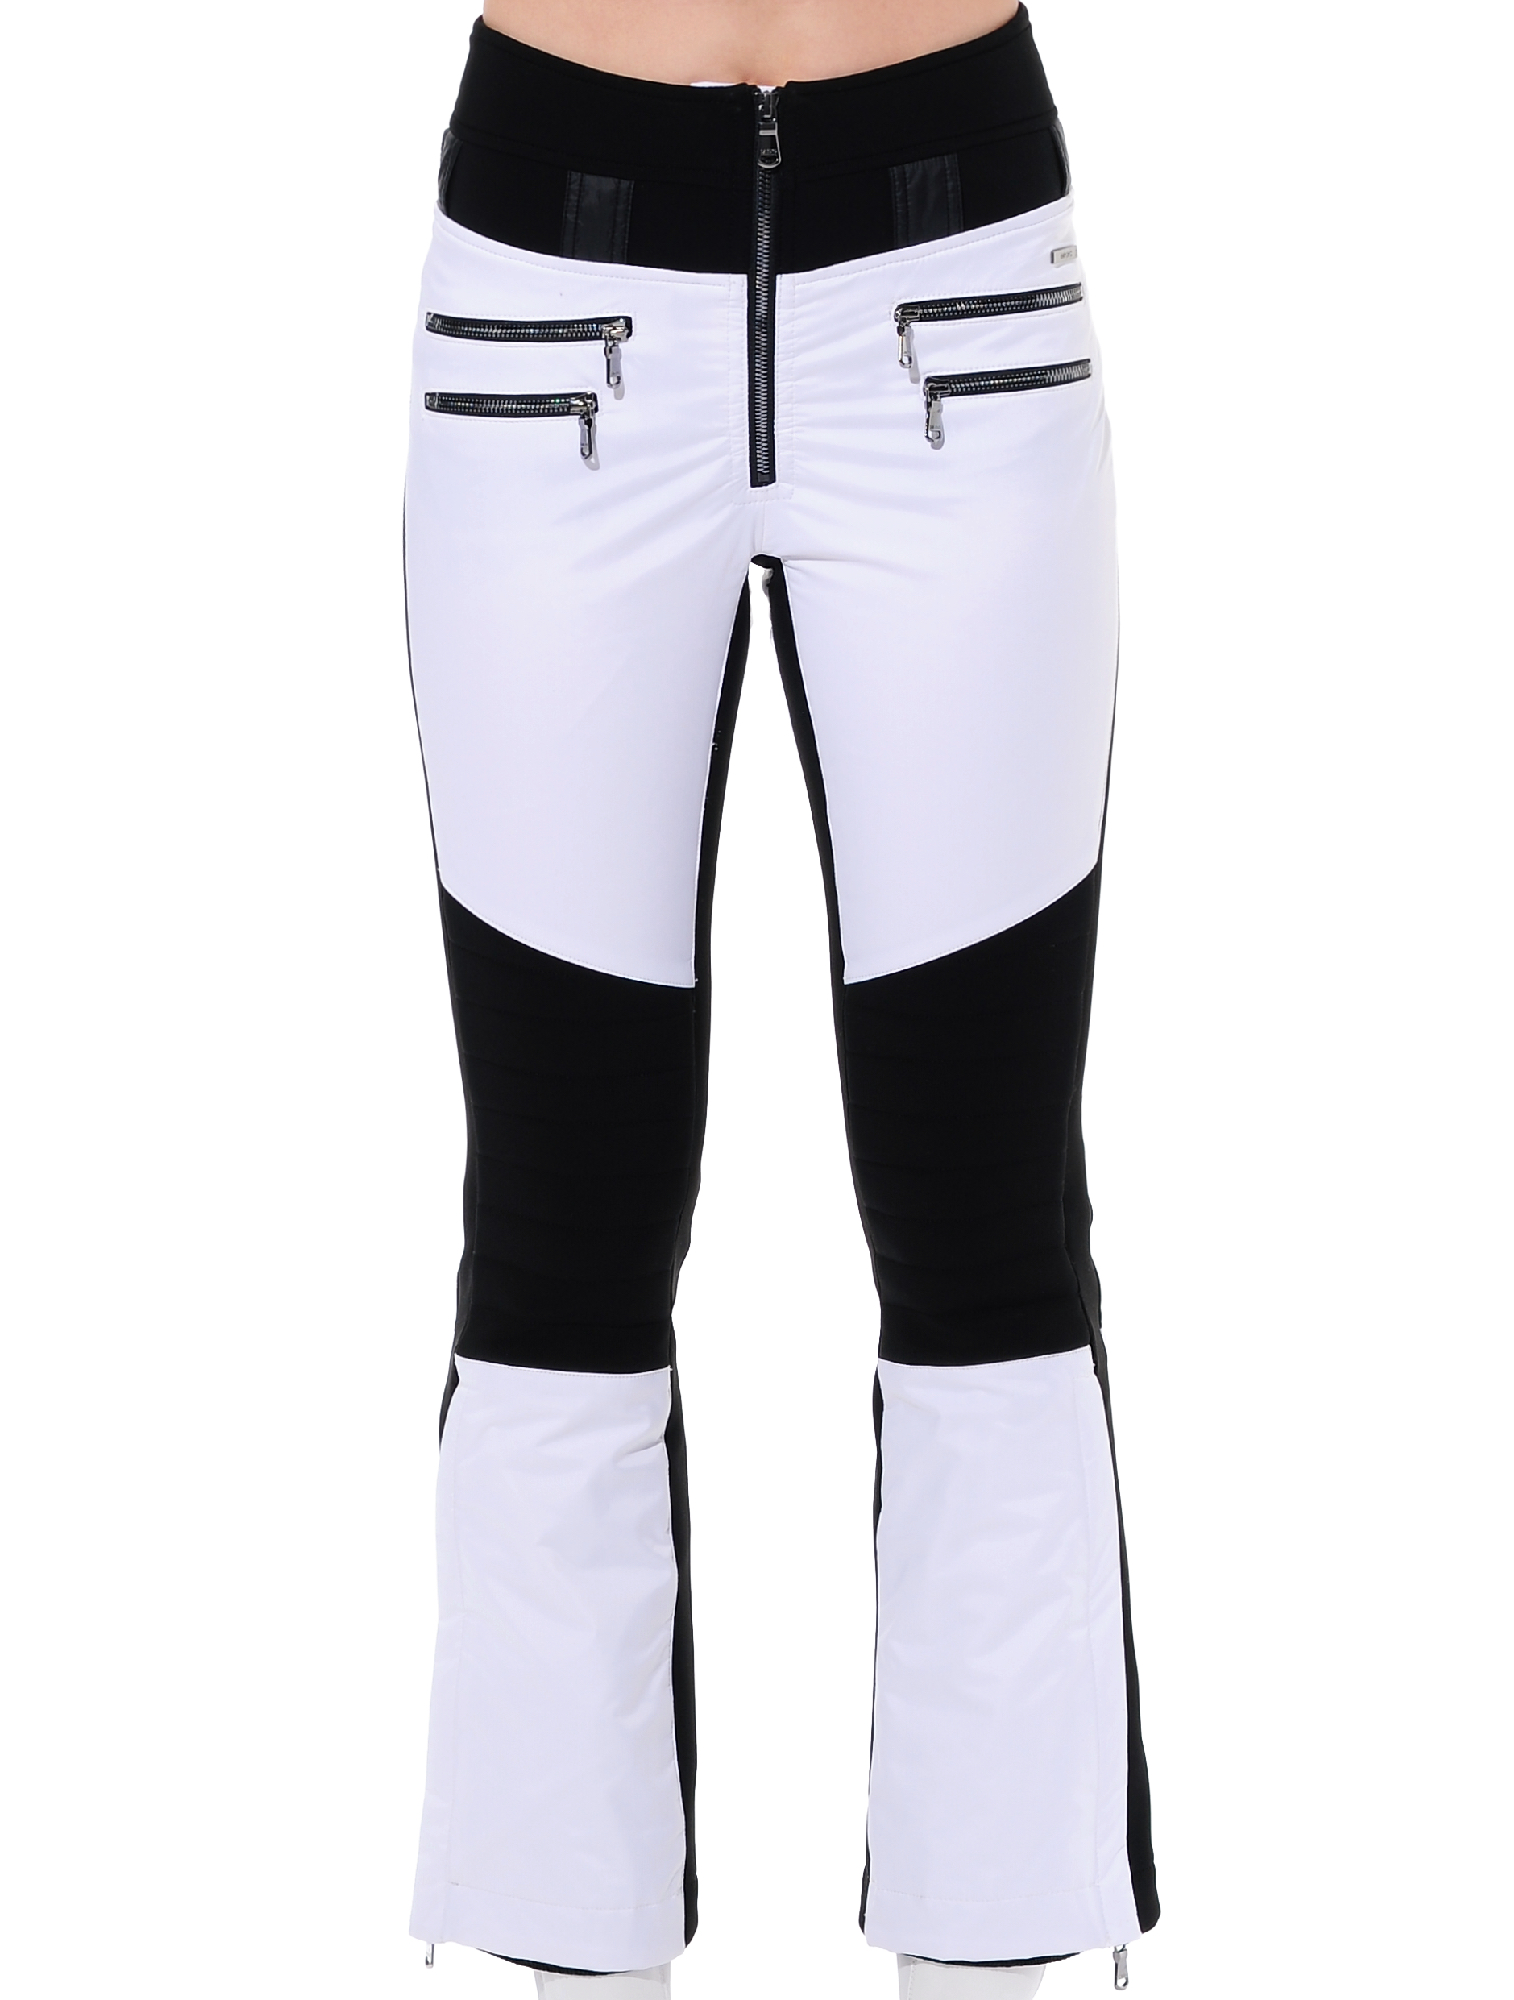 stretch ski pants white/black, 36